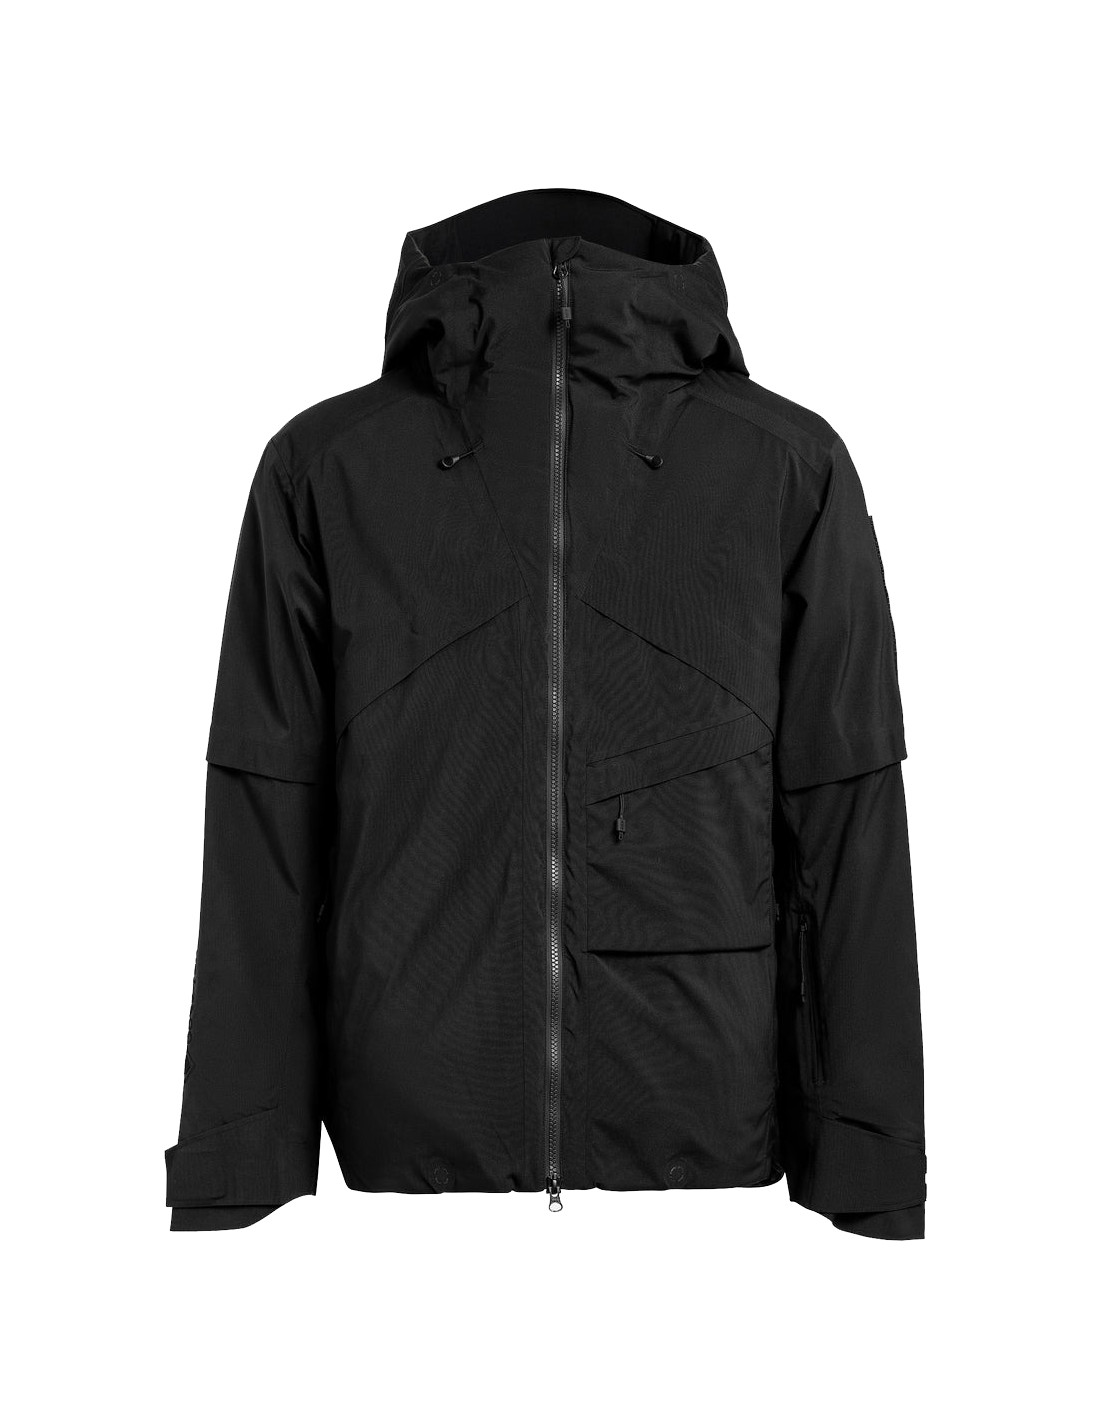 GORE-TEX 2L Stretch Insulated Jacket